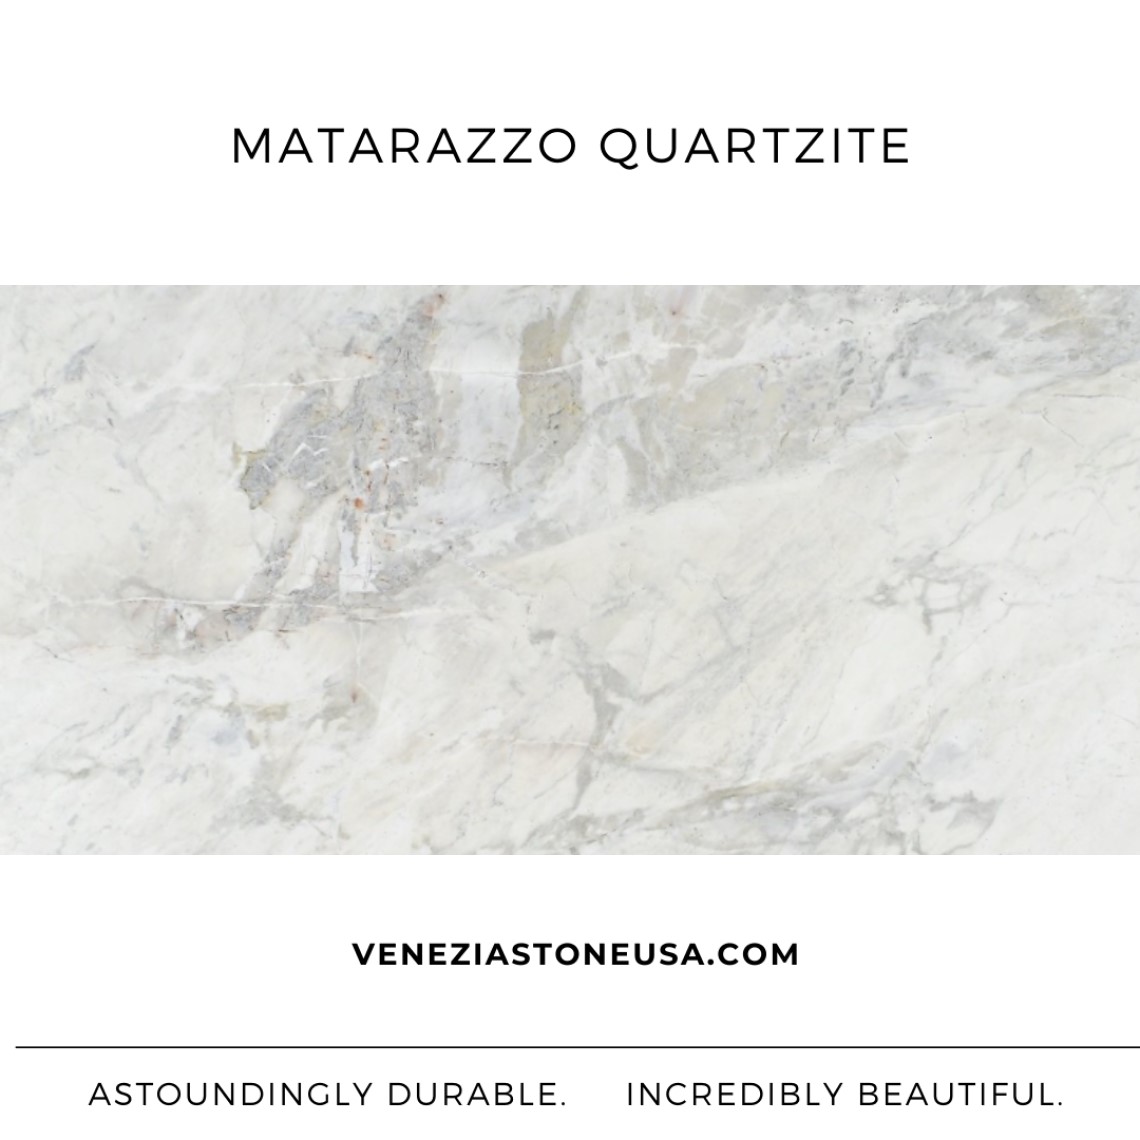 Matarazzo Quartzite